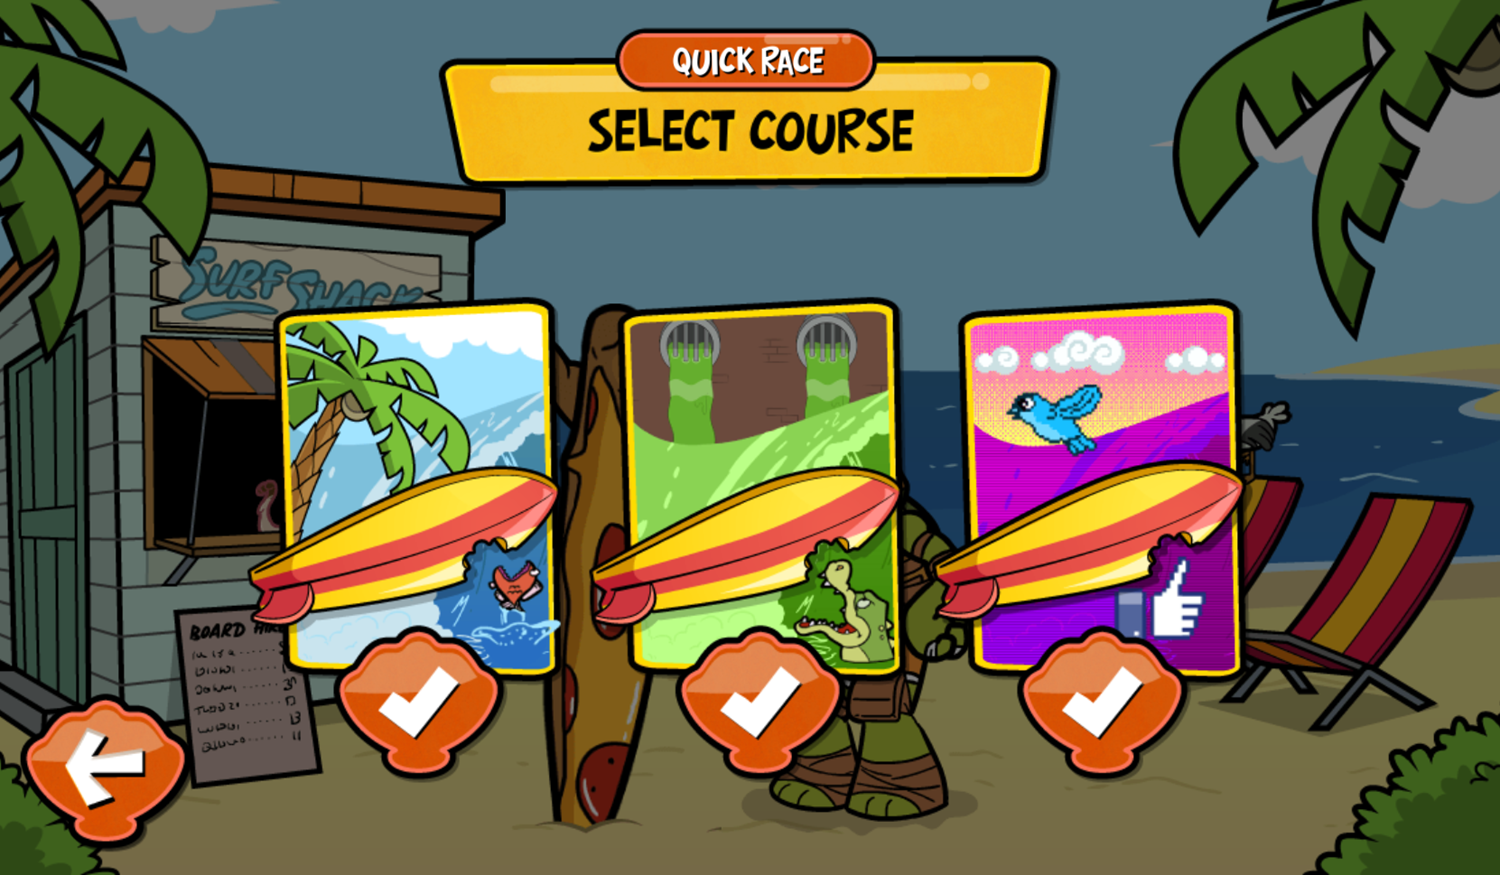 Nick Surfs Up Select Course Screenshot.